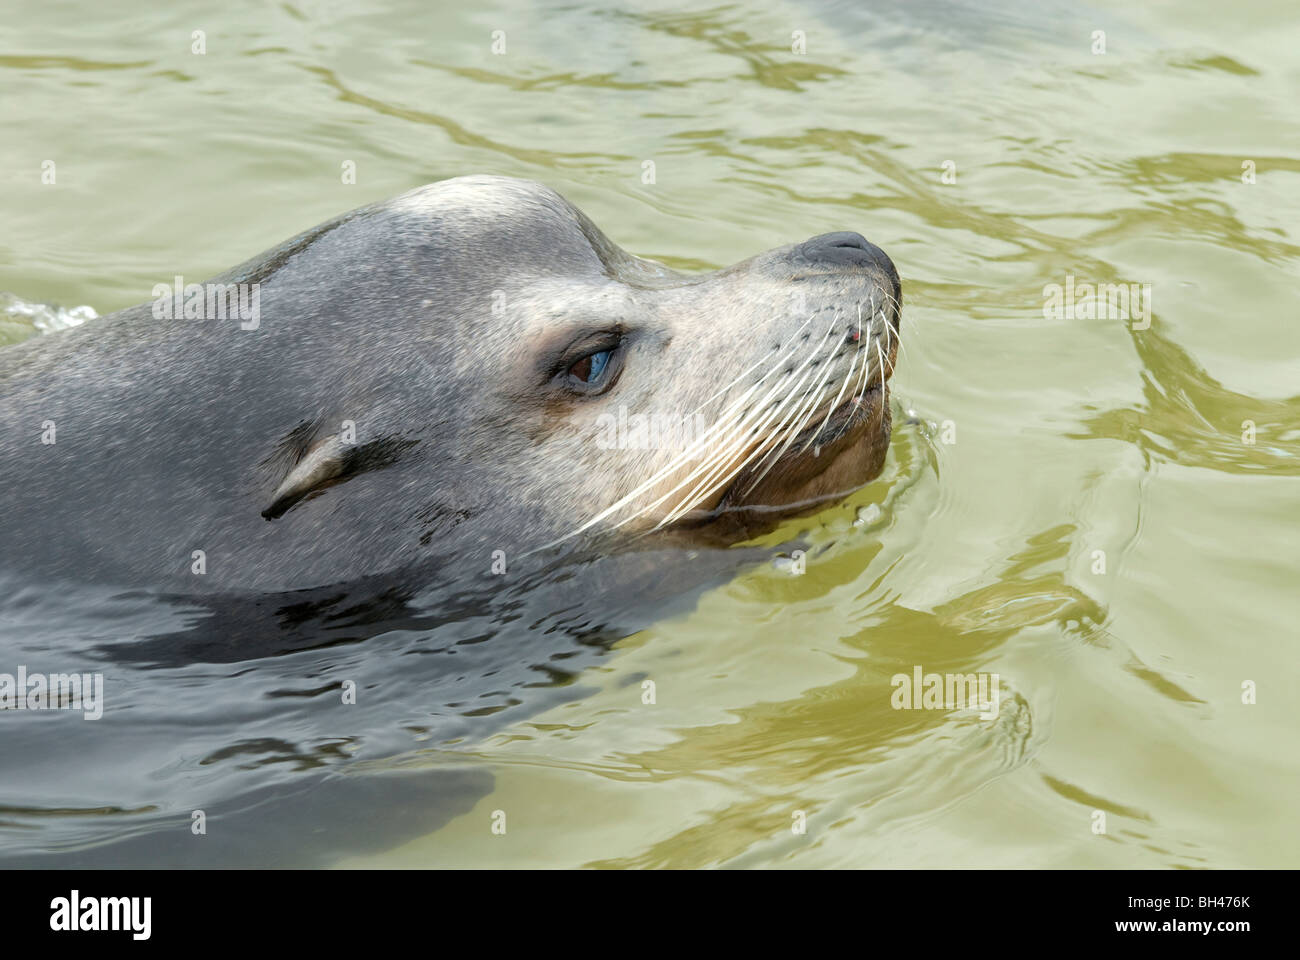 Common seal (Phoca vitulina). Close up image of seal swimming. Stock Photo